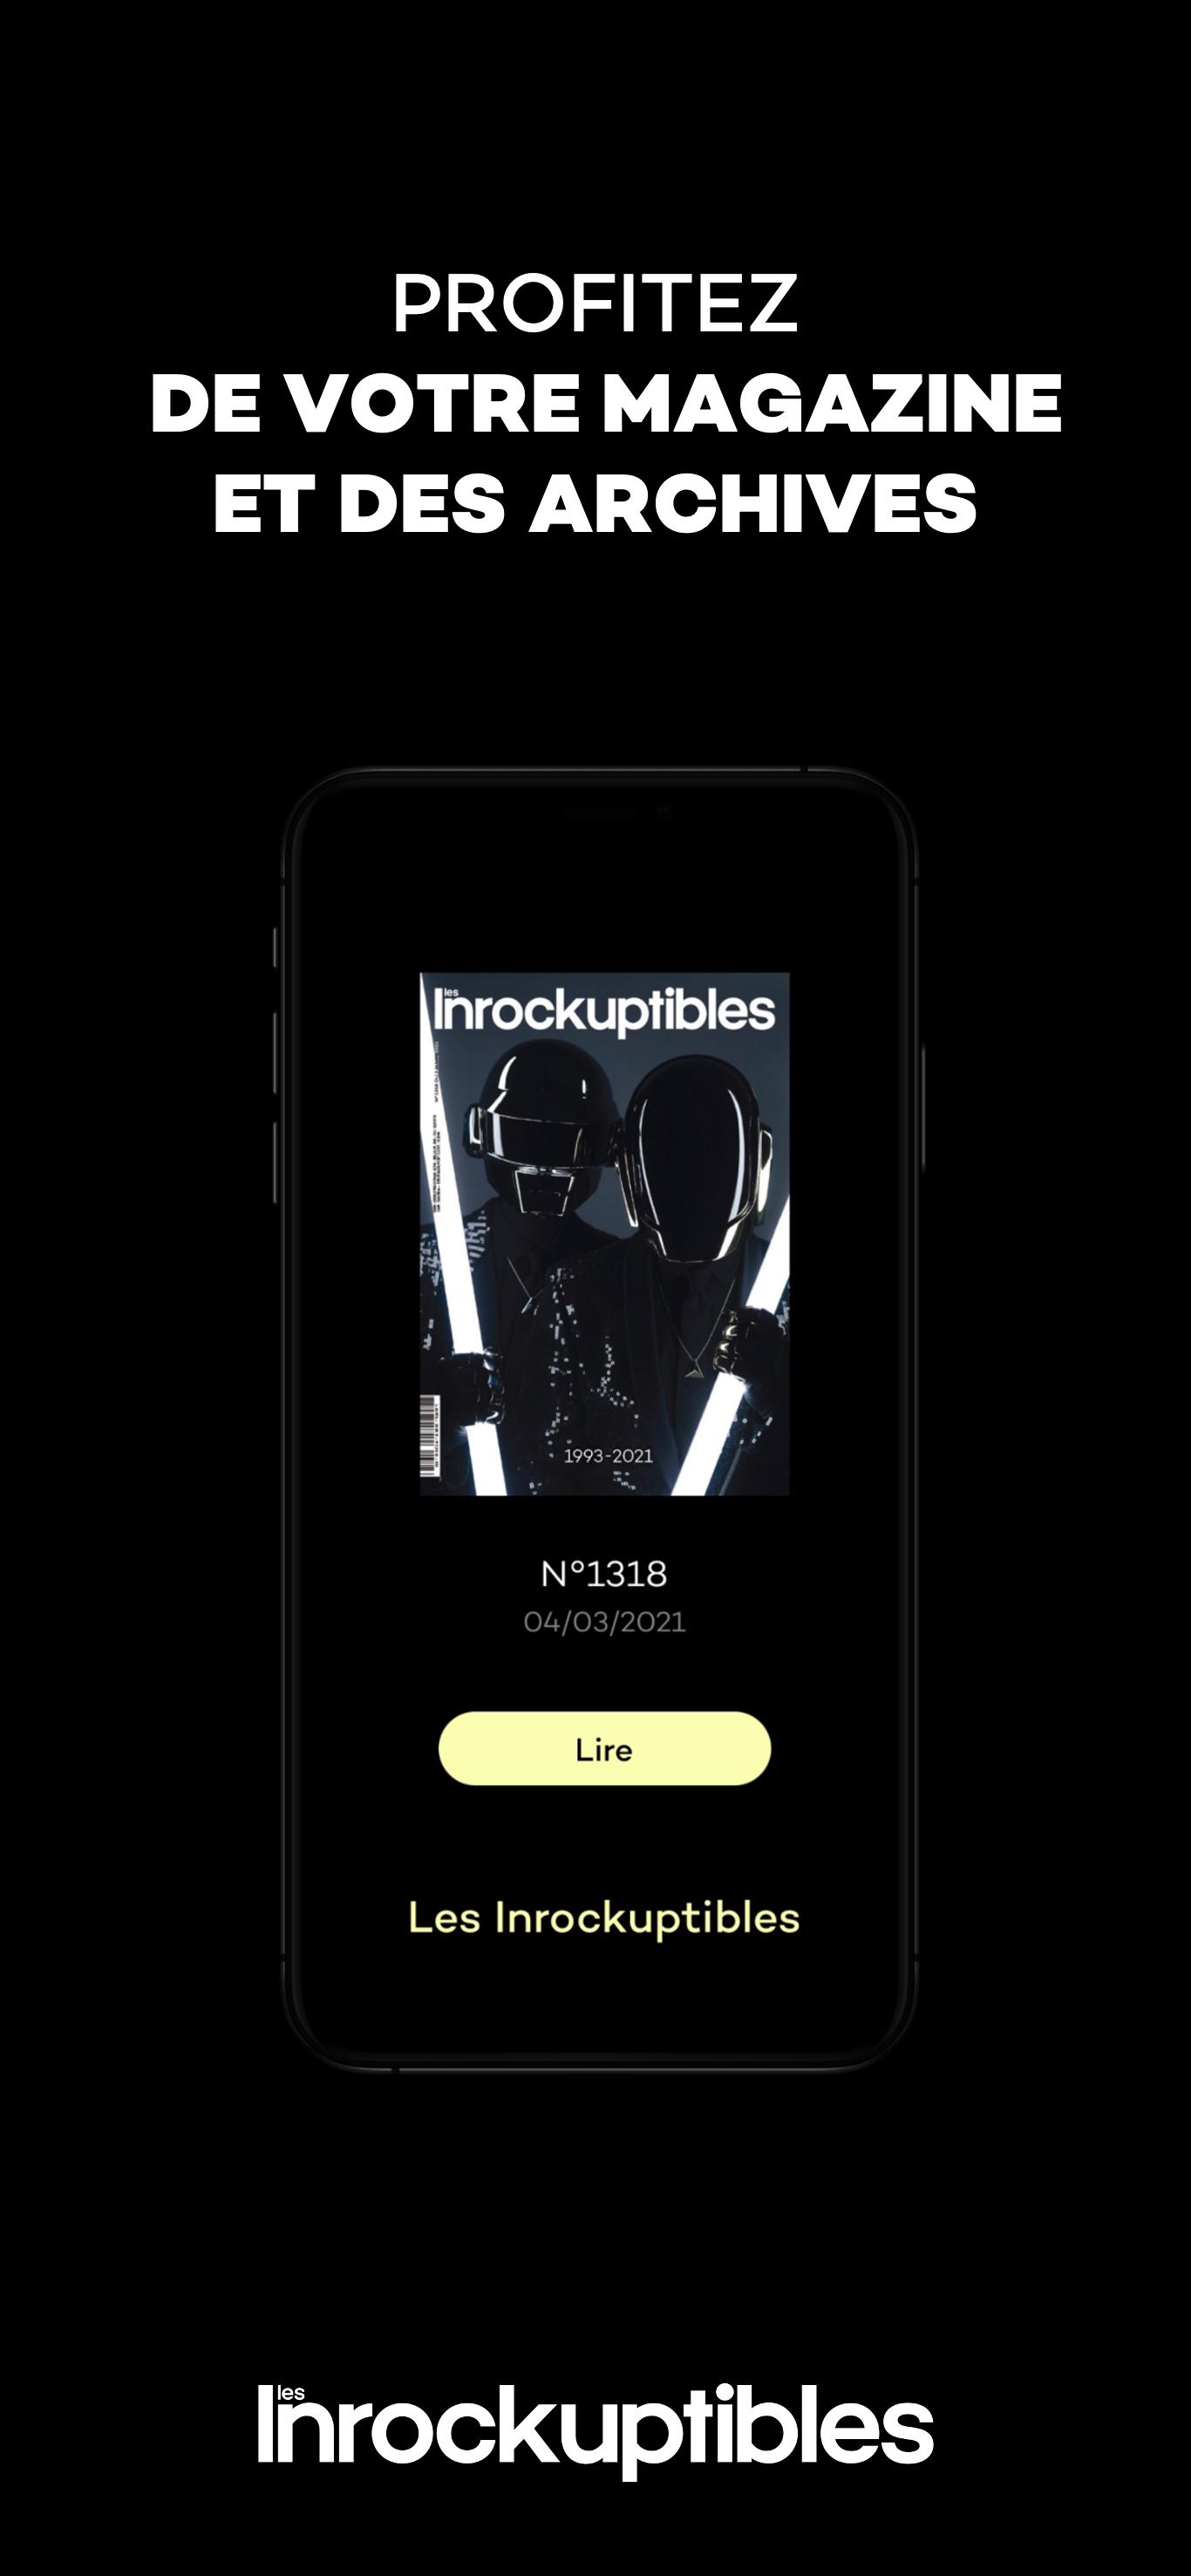 Les Inrockuptibles - playlists, articles et vidéos 6.4.3 Screenshot 4